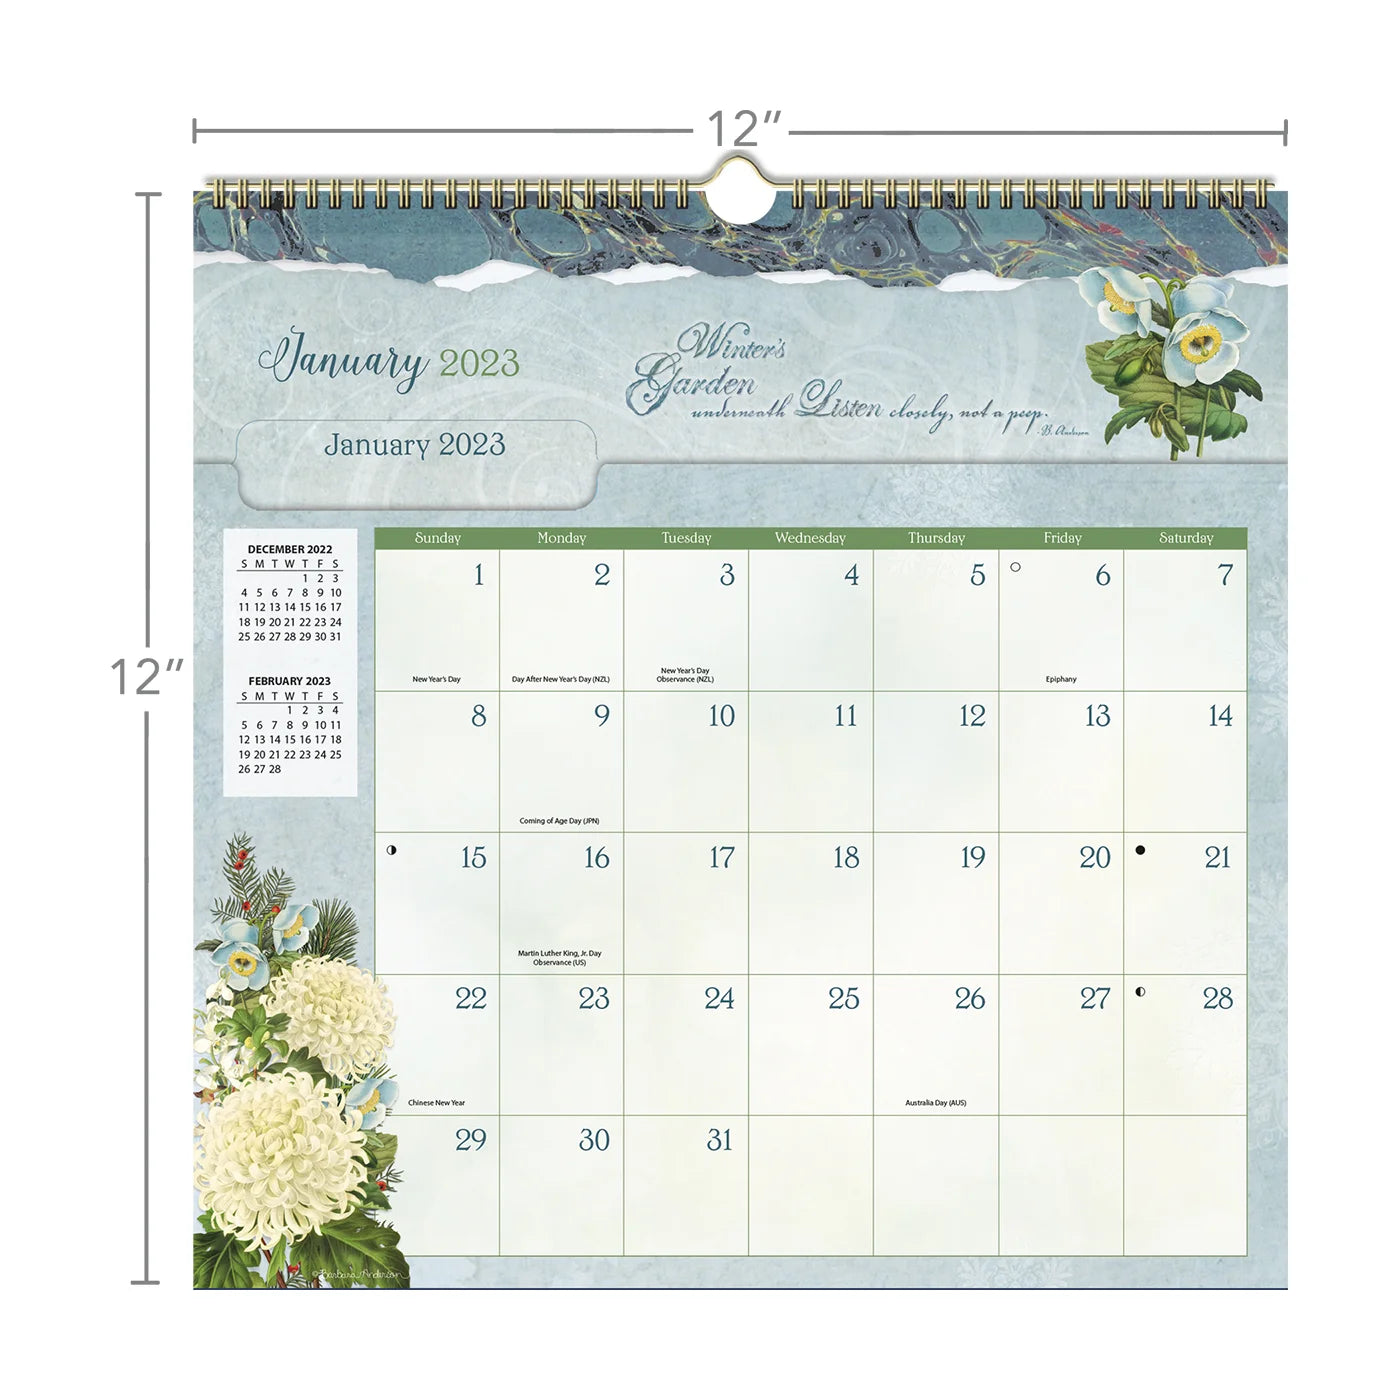 2023 LANG Botanical Gardens By Barbara Anderson - File-It Square Wall Calendar